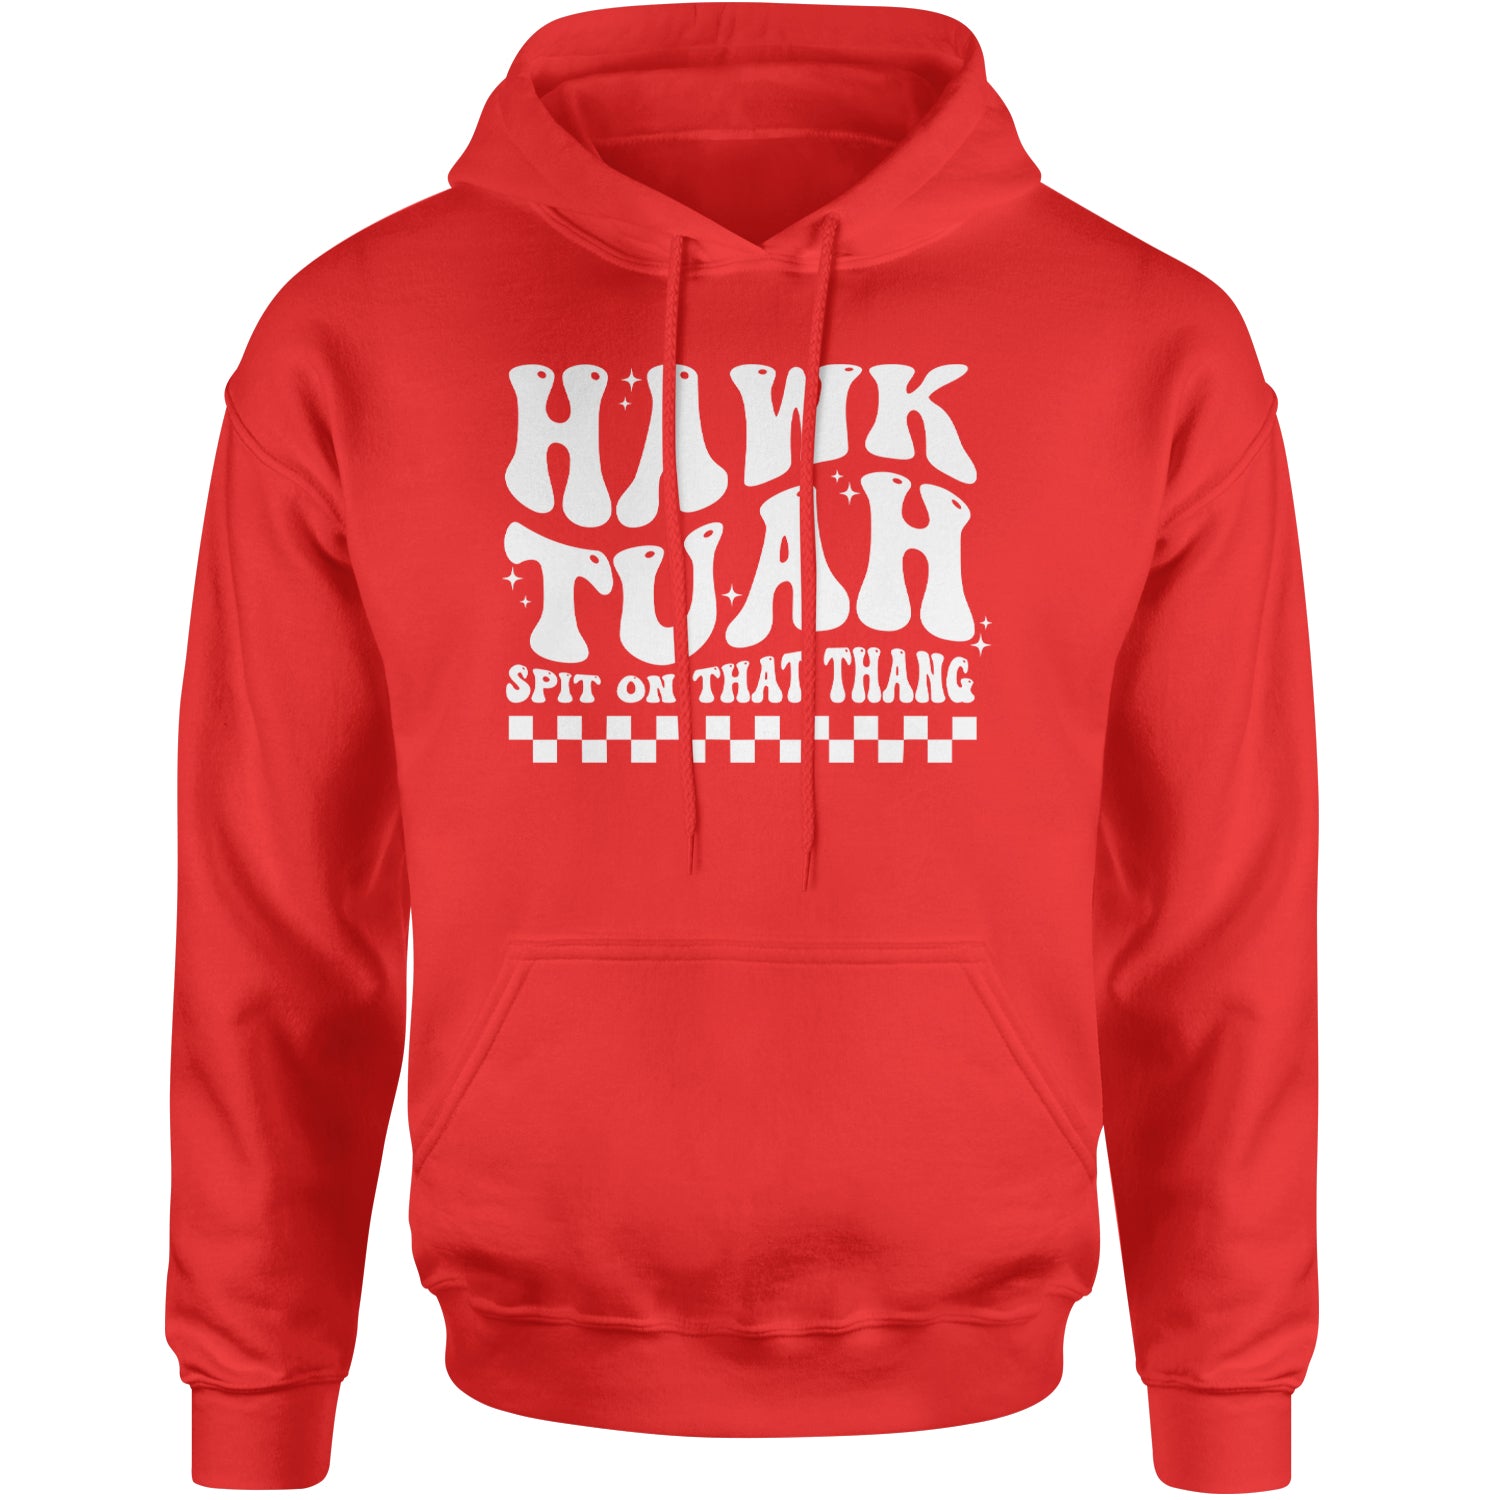 Hawk Tuah Spit On That Thang Adult Hoodie Sweatshirt Red